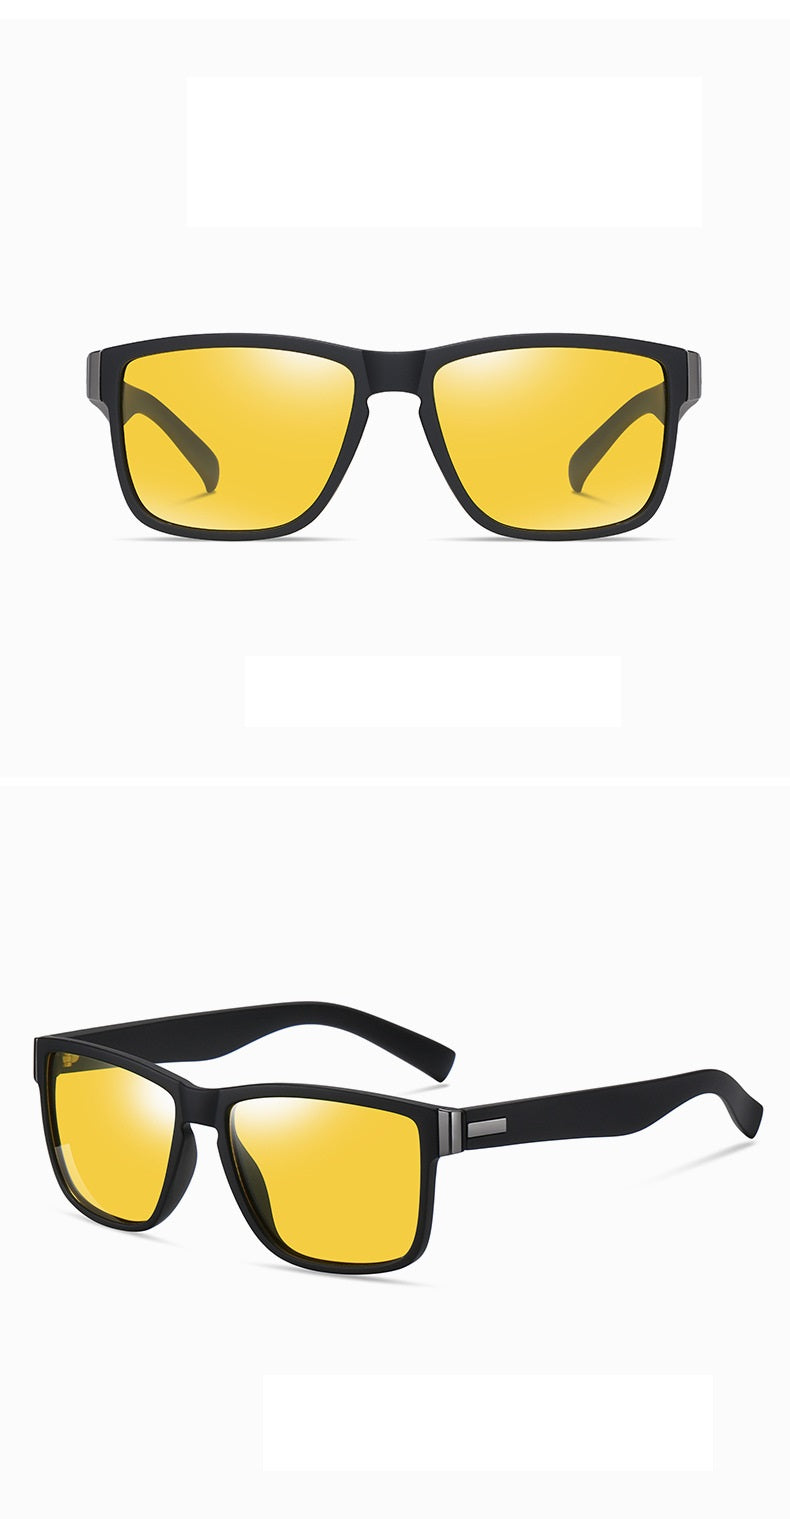 Details 162+ night vision sunglasses india latest